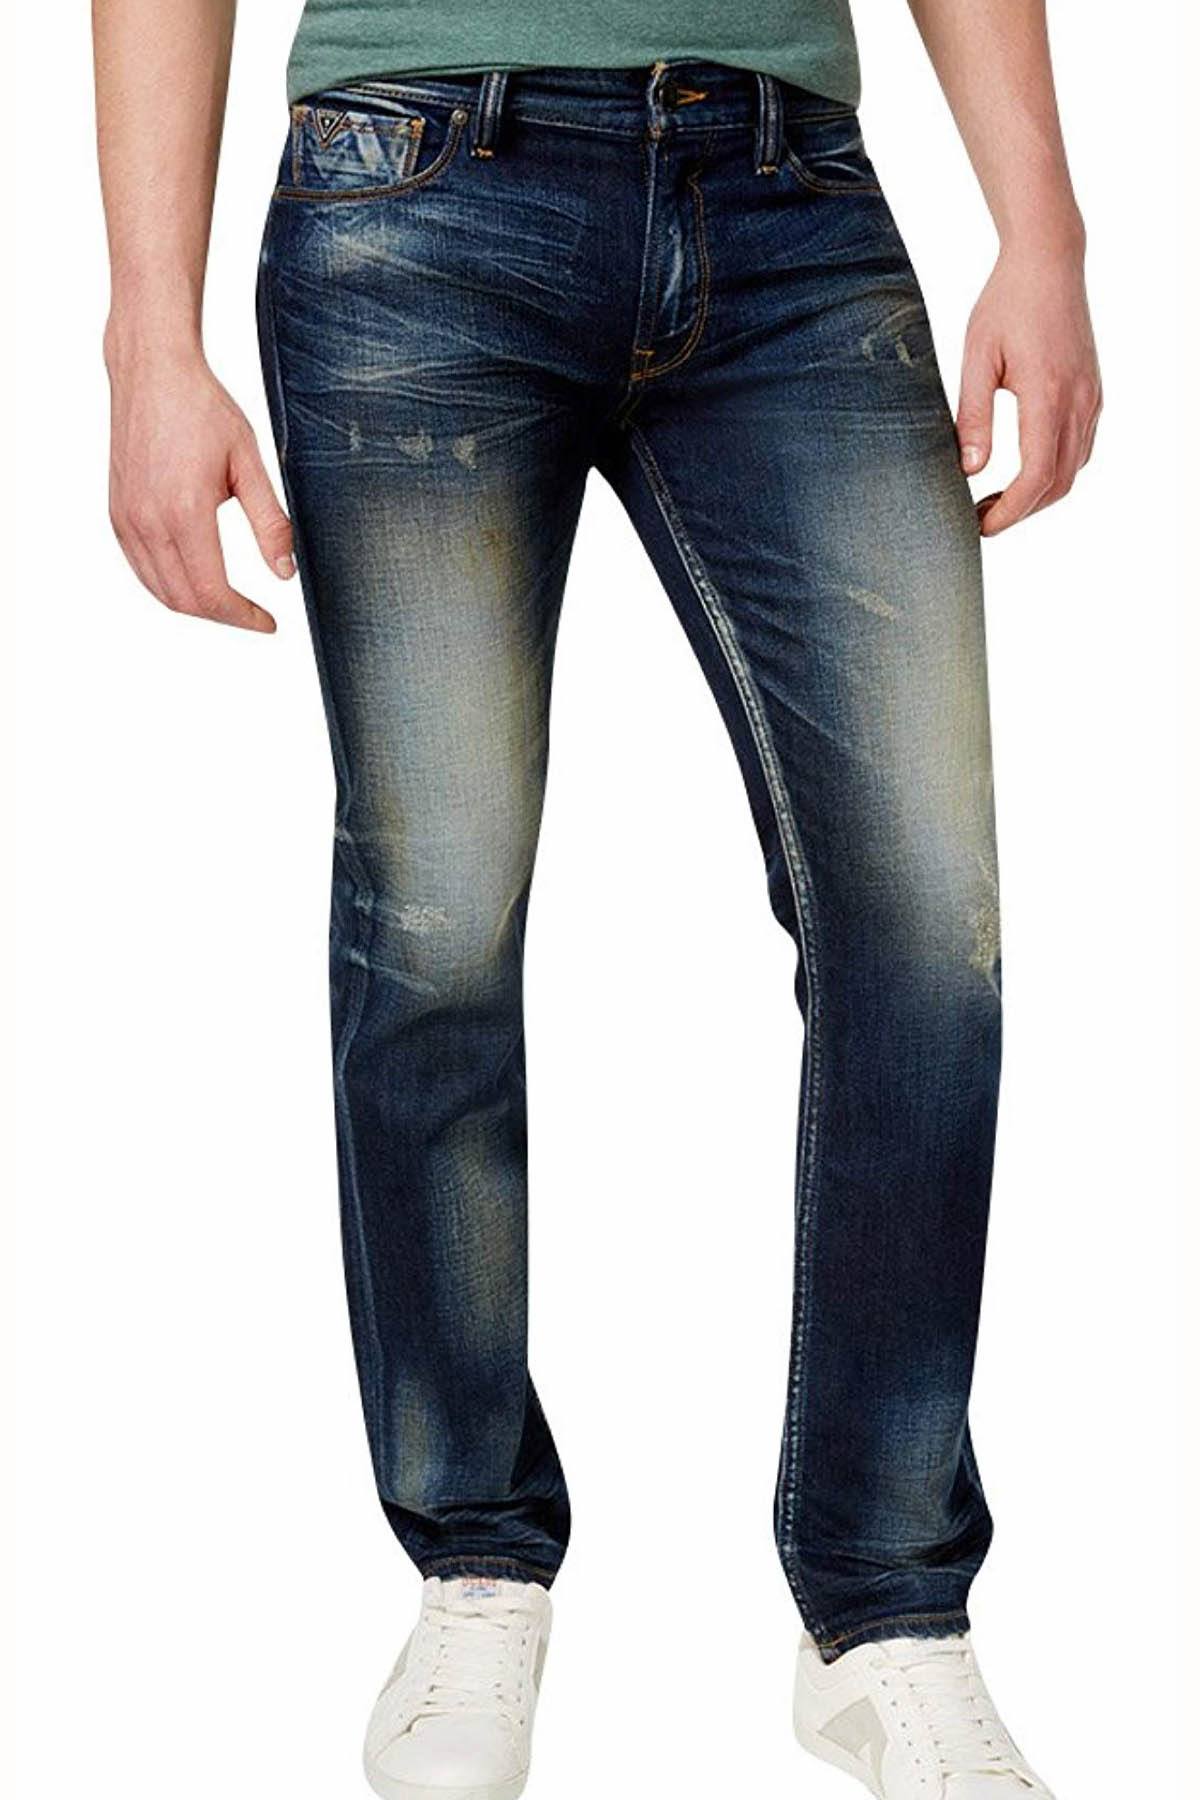 Guess Blue Slim Straight Burnt Wash Jean